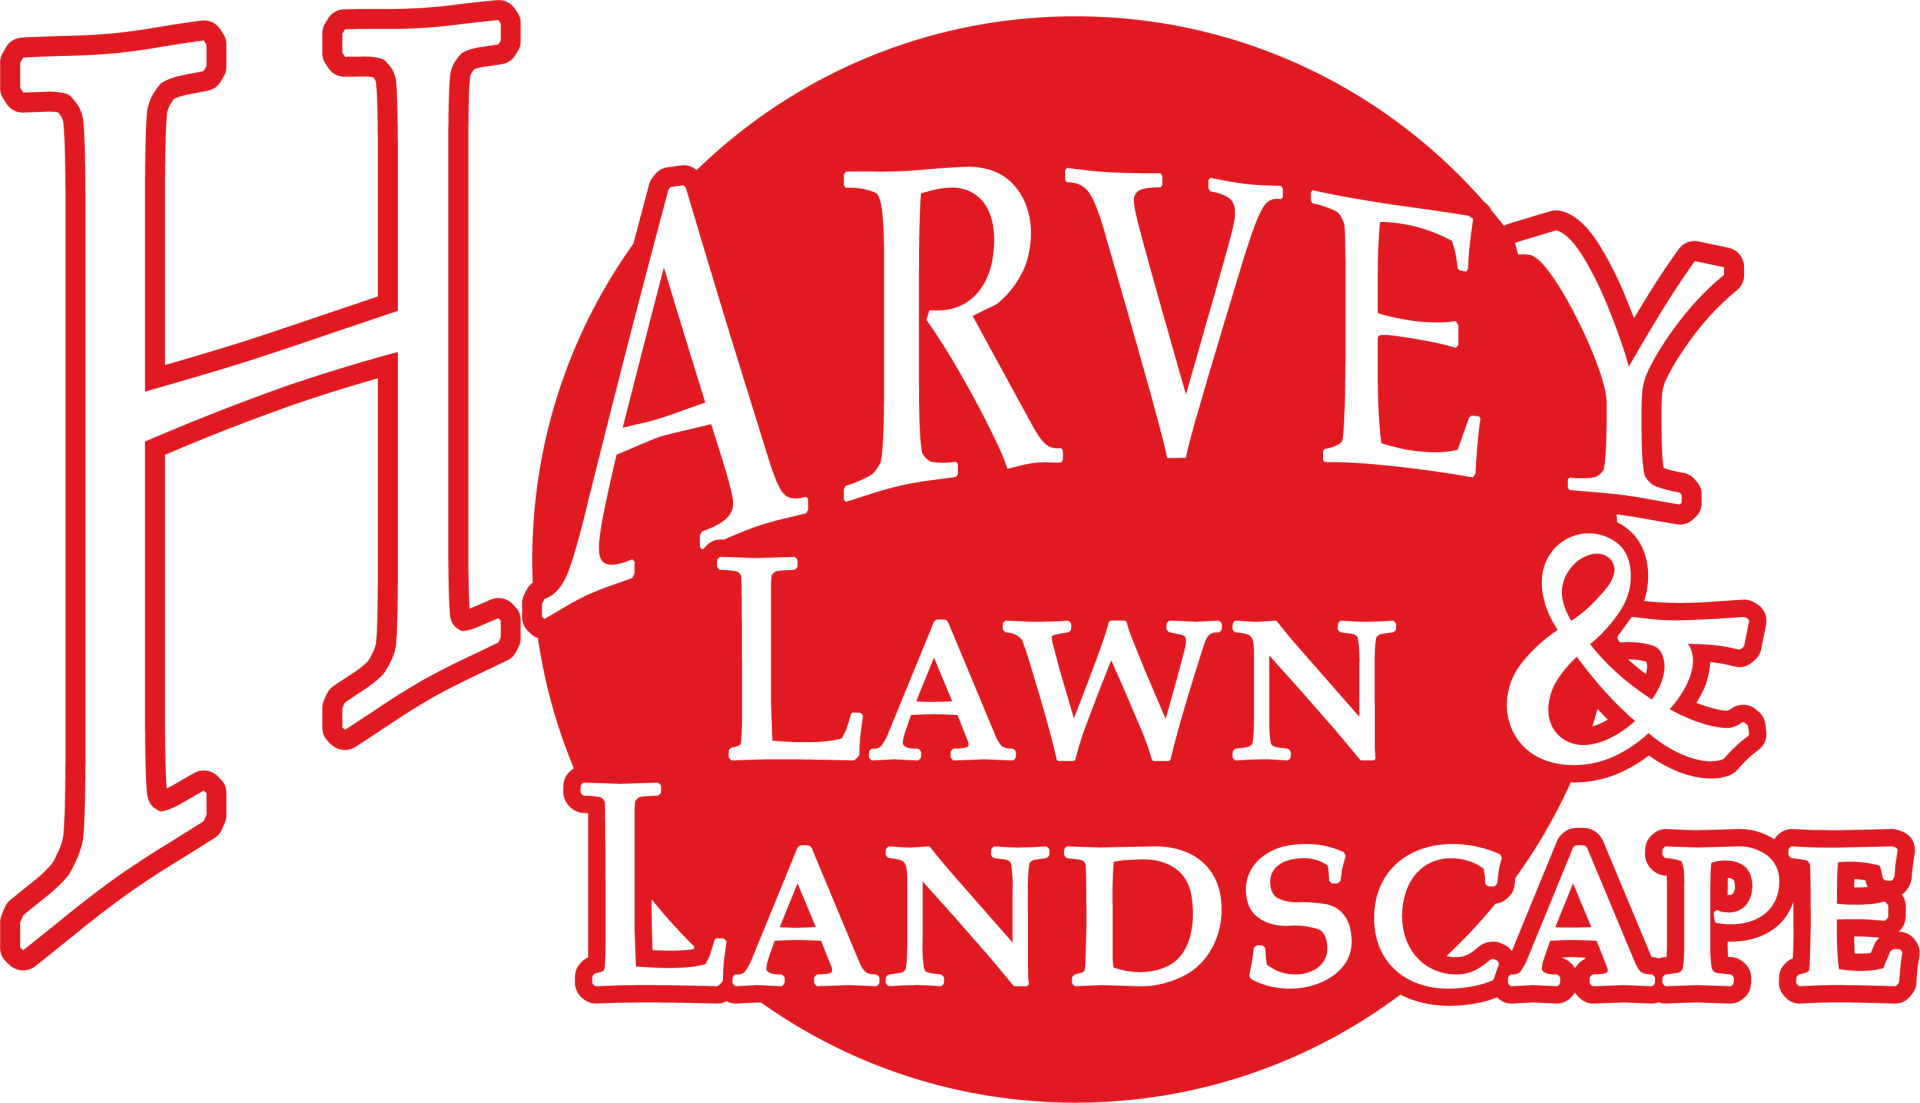 Harvey Lawn & Landscape